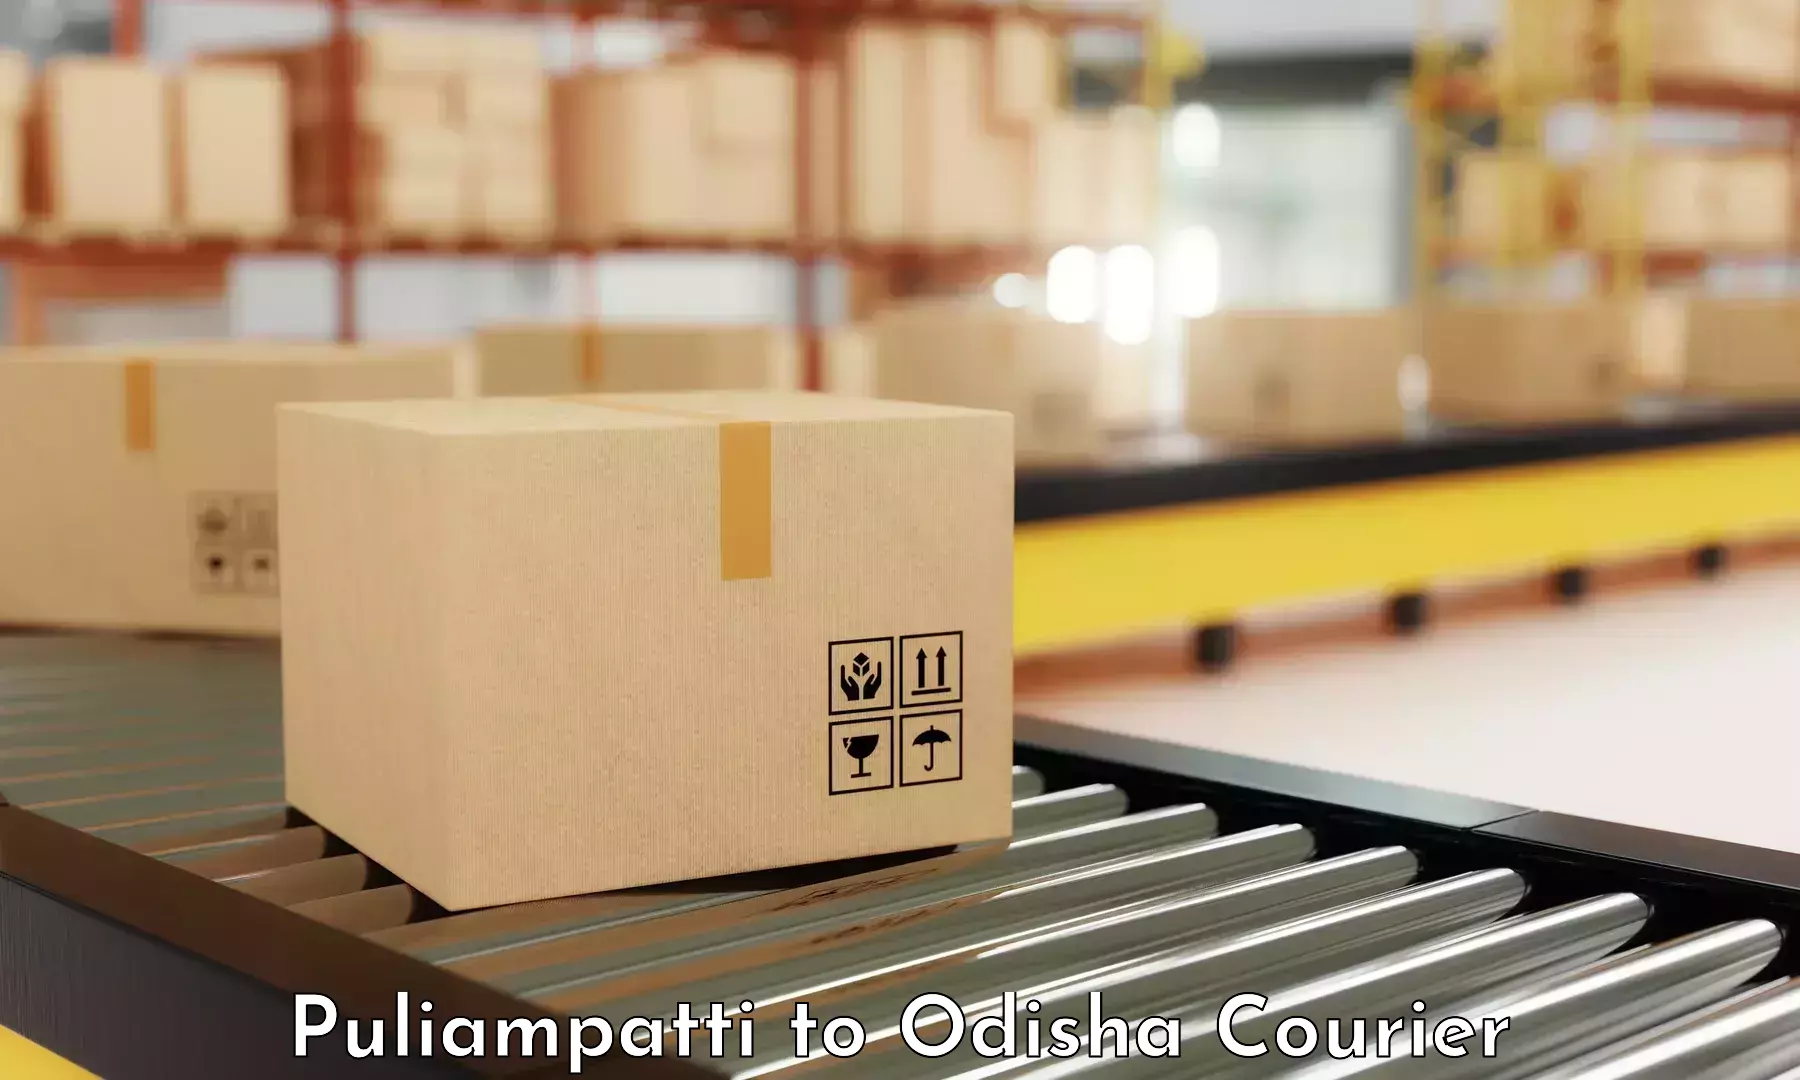 Global courier networks Puliampatti to Melchhamunda